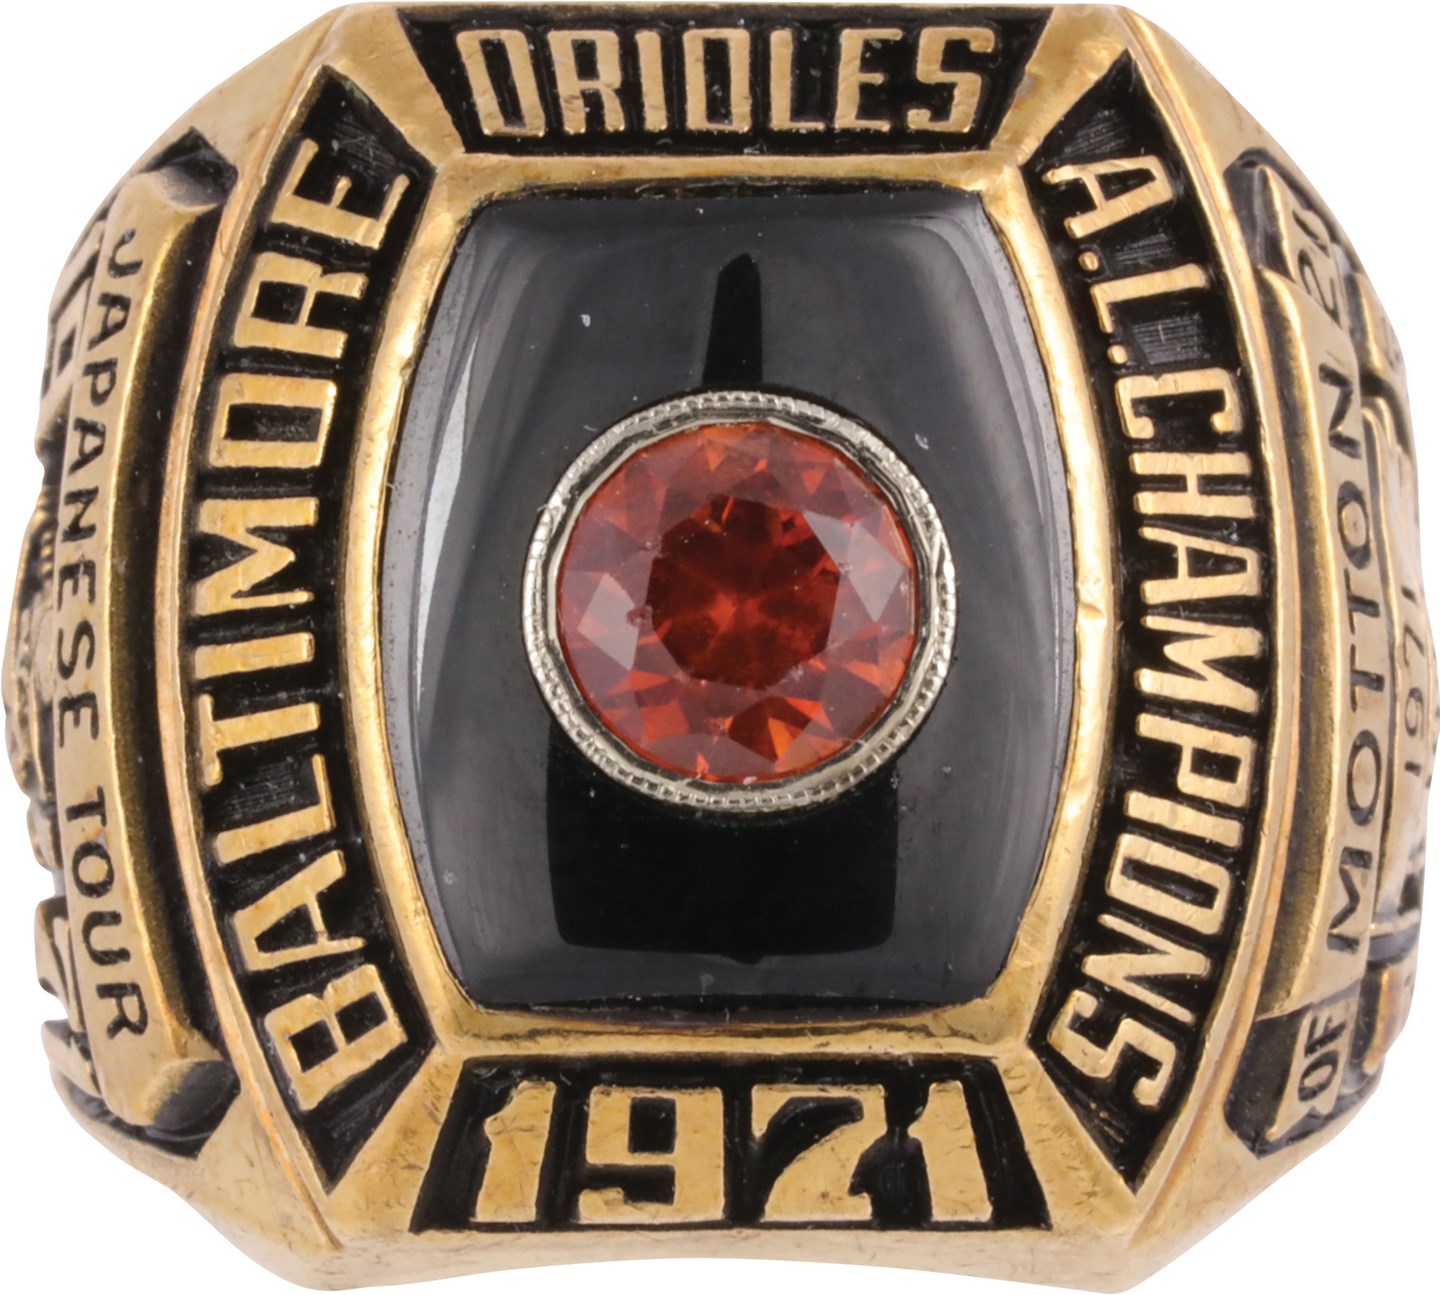 - 1971 Curt Motton Baltimore Orioles American League Championship Player Ring